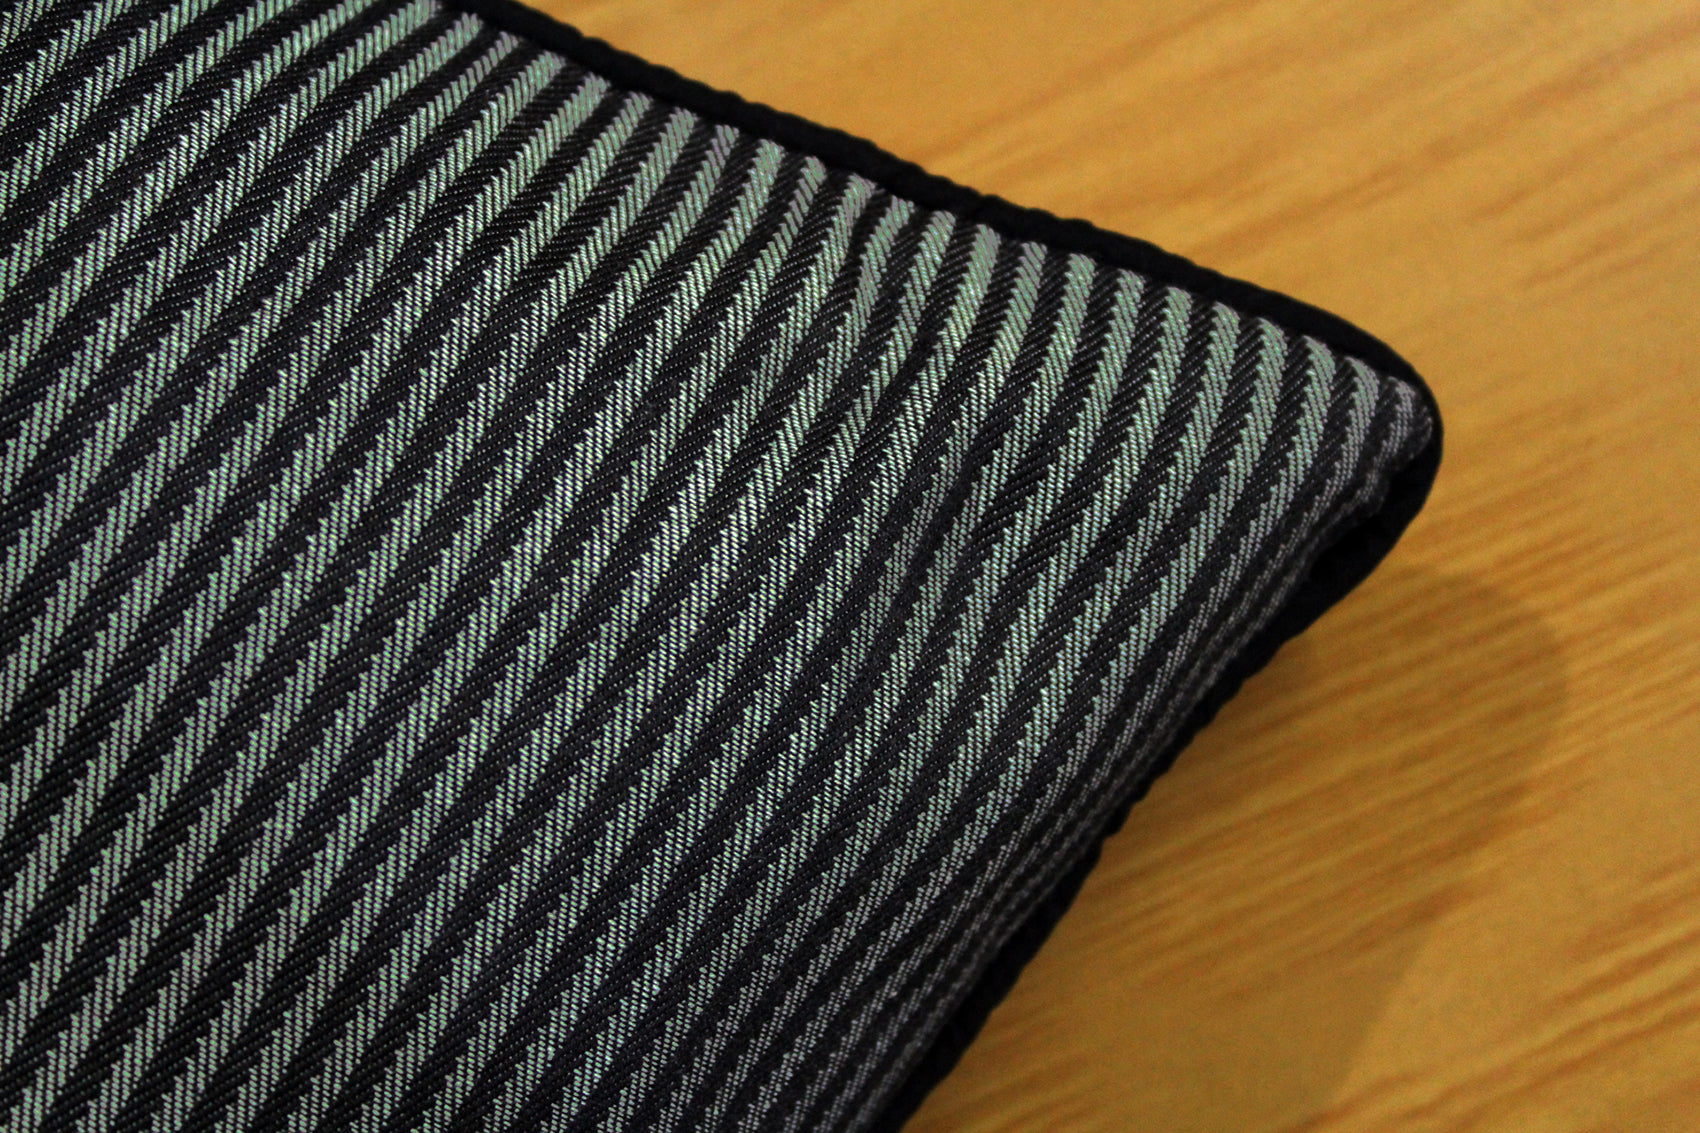 ALPHA Woven Cotton Stripes 2 Pcs Cushion Cover set - Black